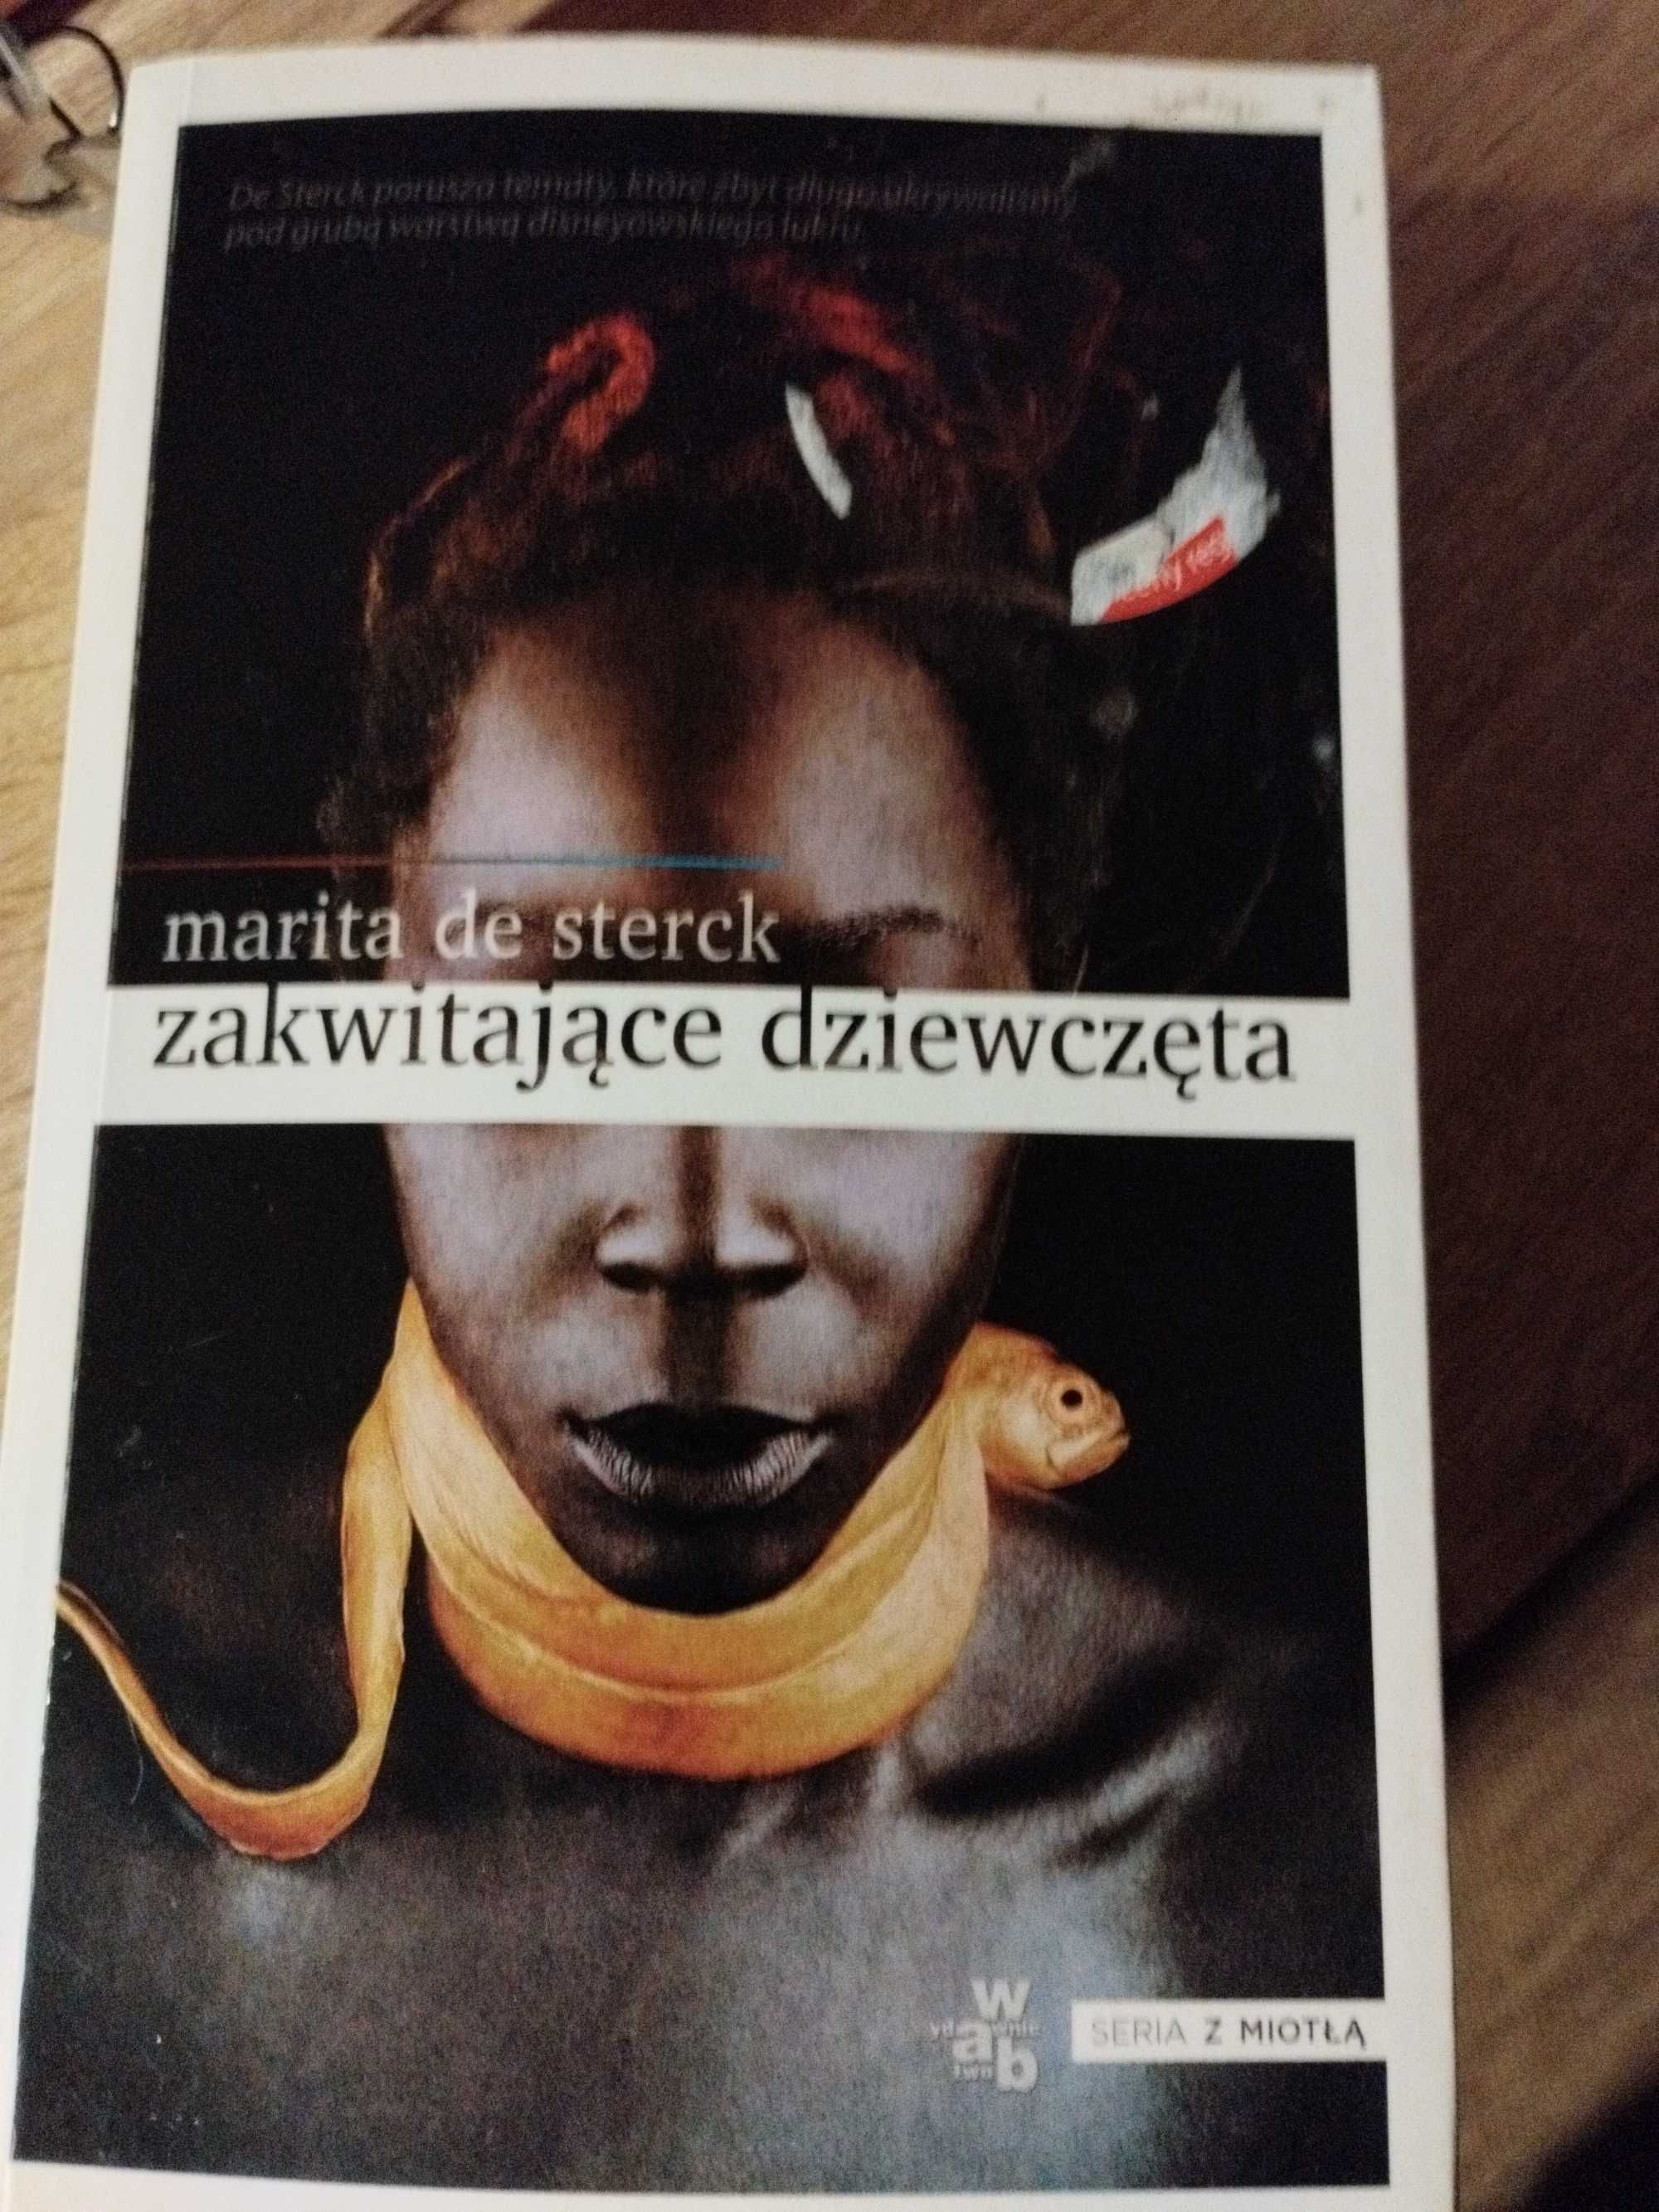 Marita de Sterck
Zakwitające dziewczeta